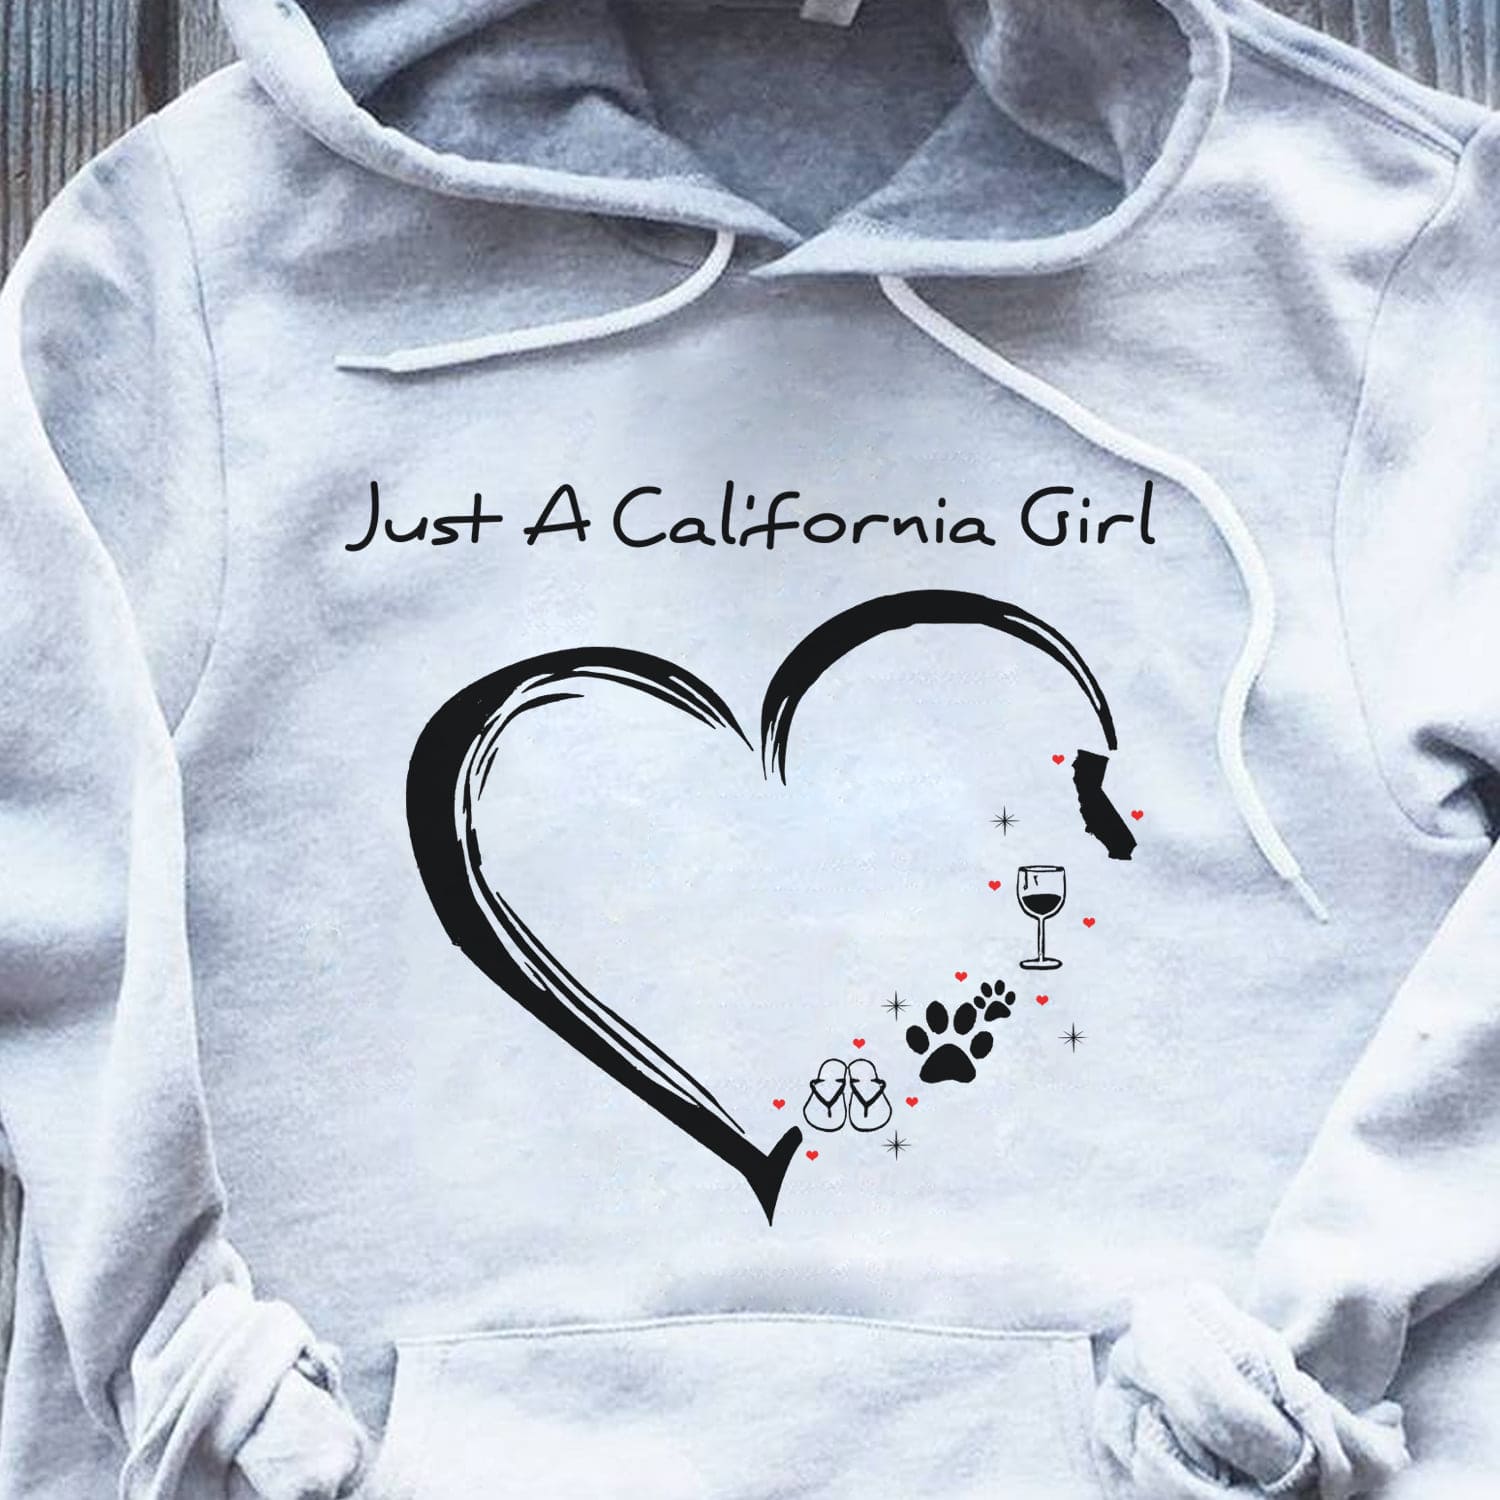 Just a California girl - Flip flop kinda girl, dog and wine